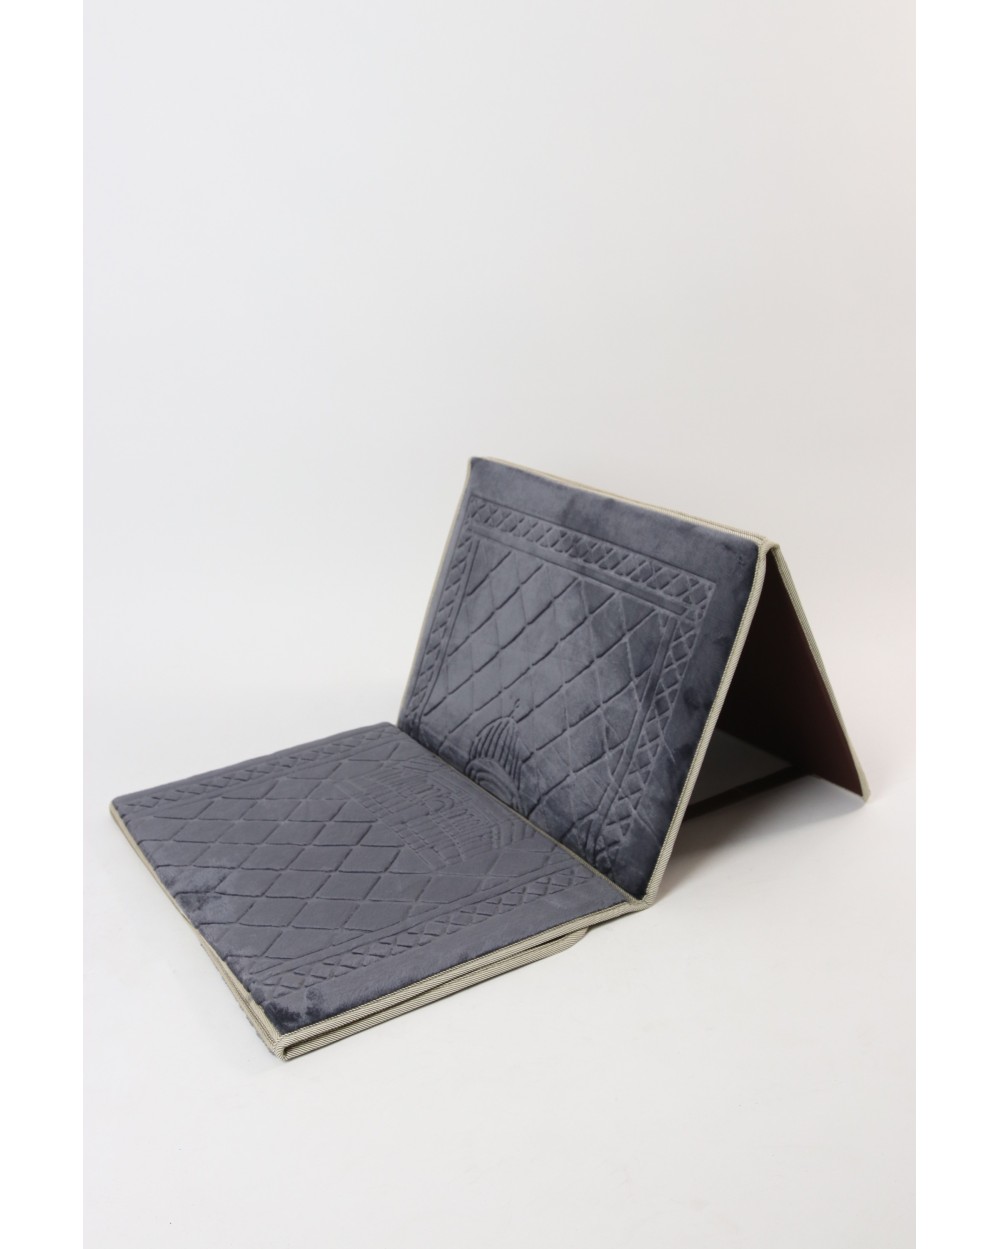 Foldable prayer mat with backrest